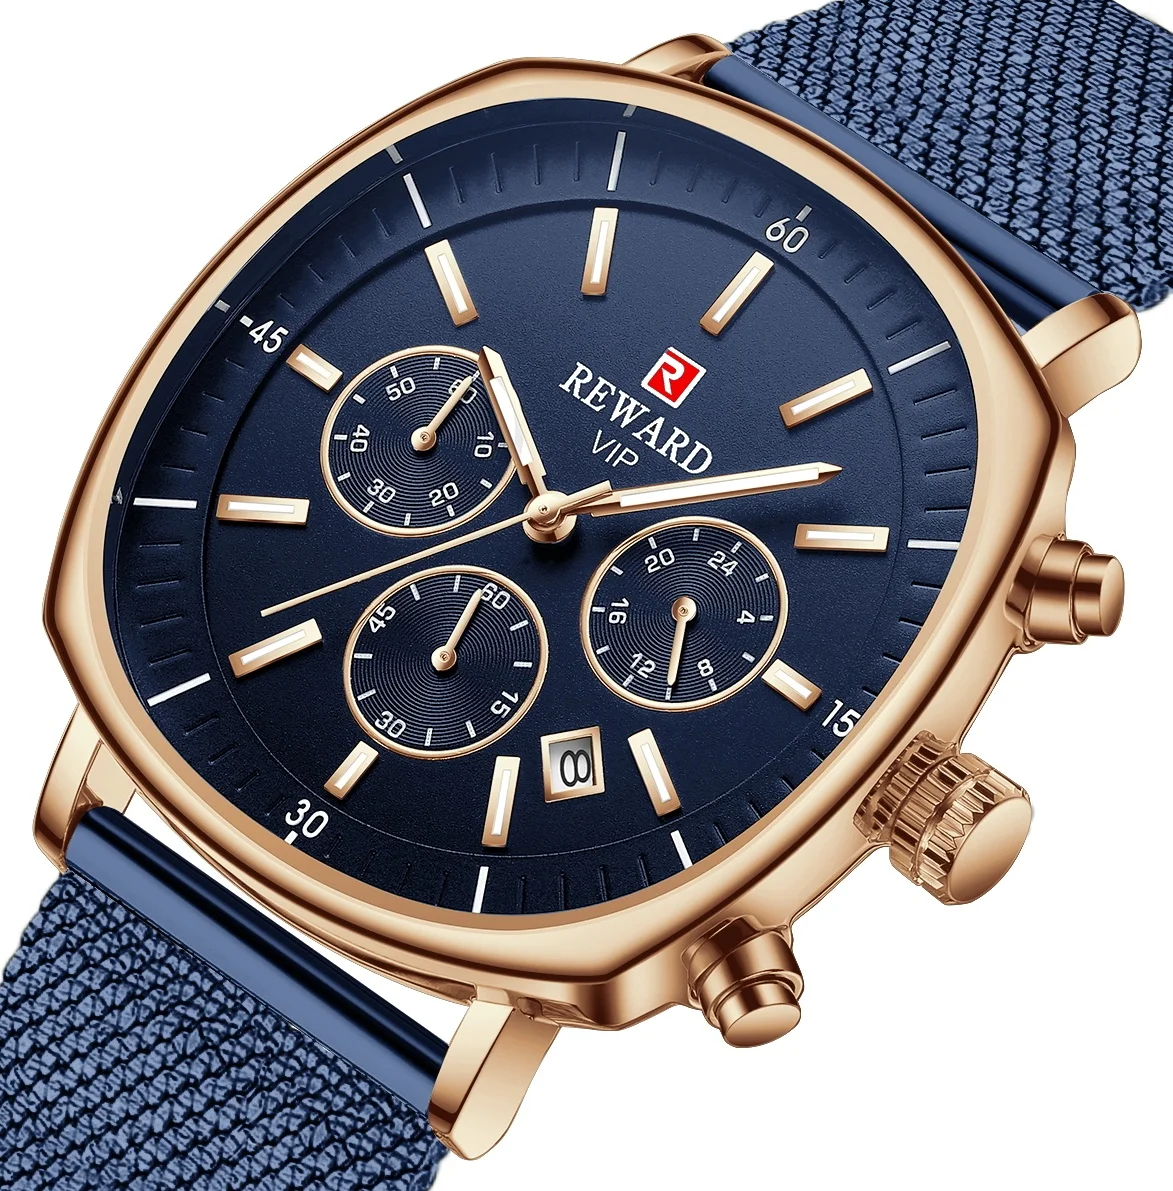 

Reward China watch supplier stainless steel new blue quartz watches for men business sport style trend wristwatch gift